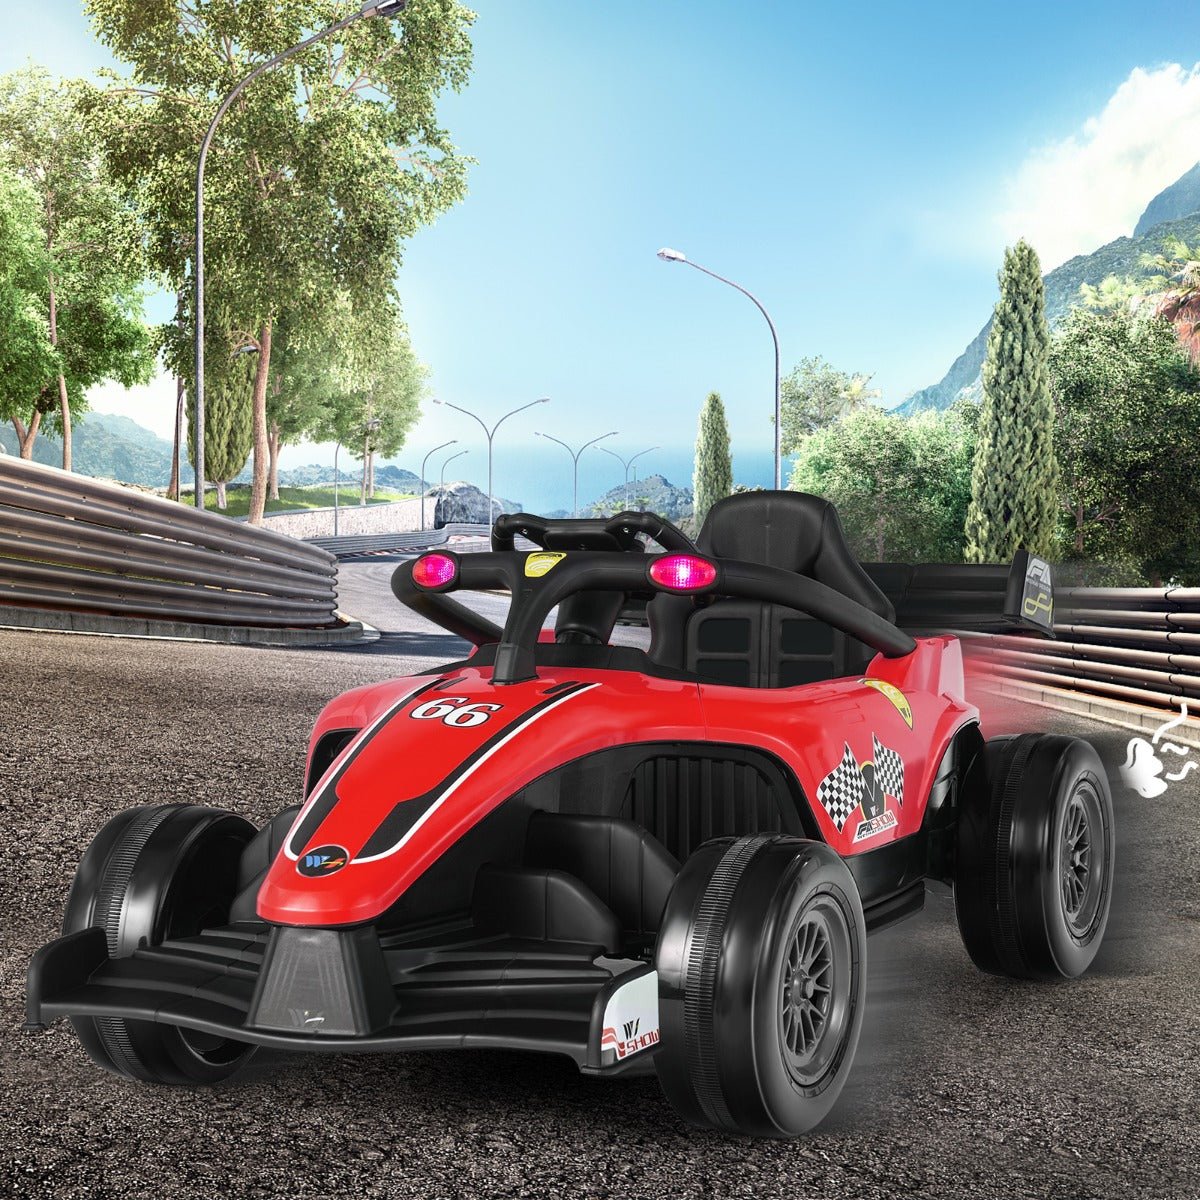 Ride on Racing Car Fun: Where Speed and Adventure Meet!